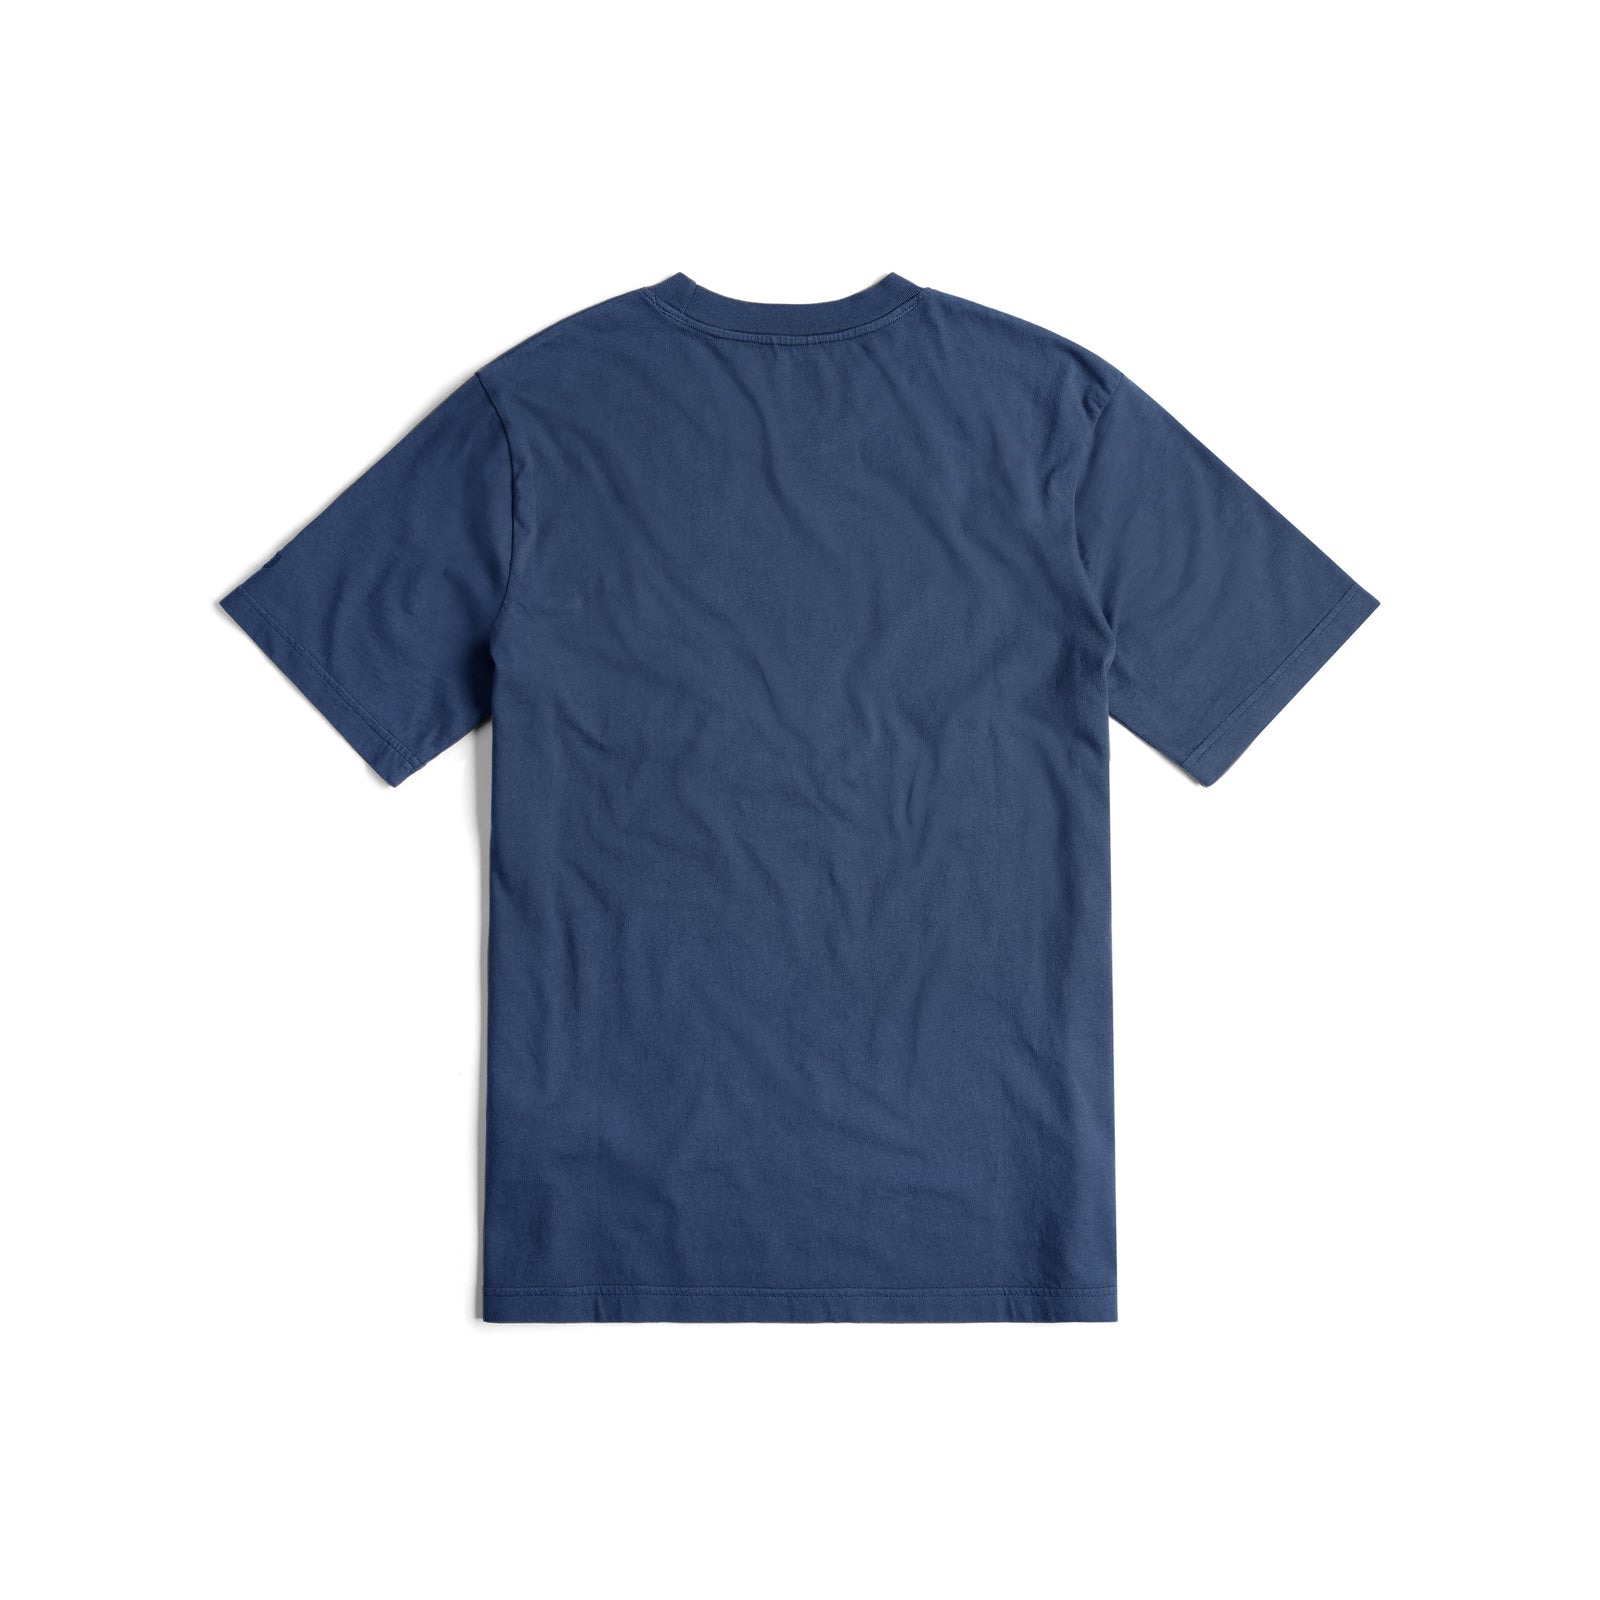 Topo Designs Men's Dirt Pocket Tee 100% organic cotton short sleeve t-shirt in "Dark Denim"